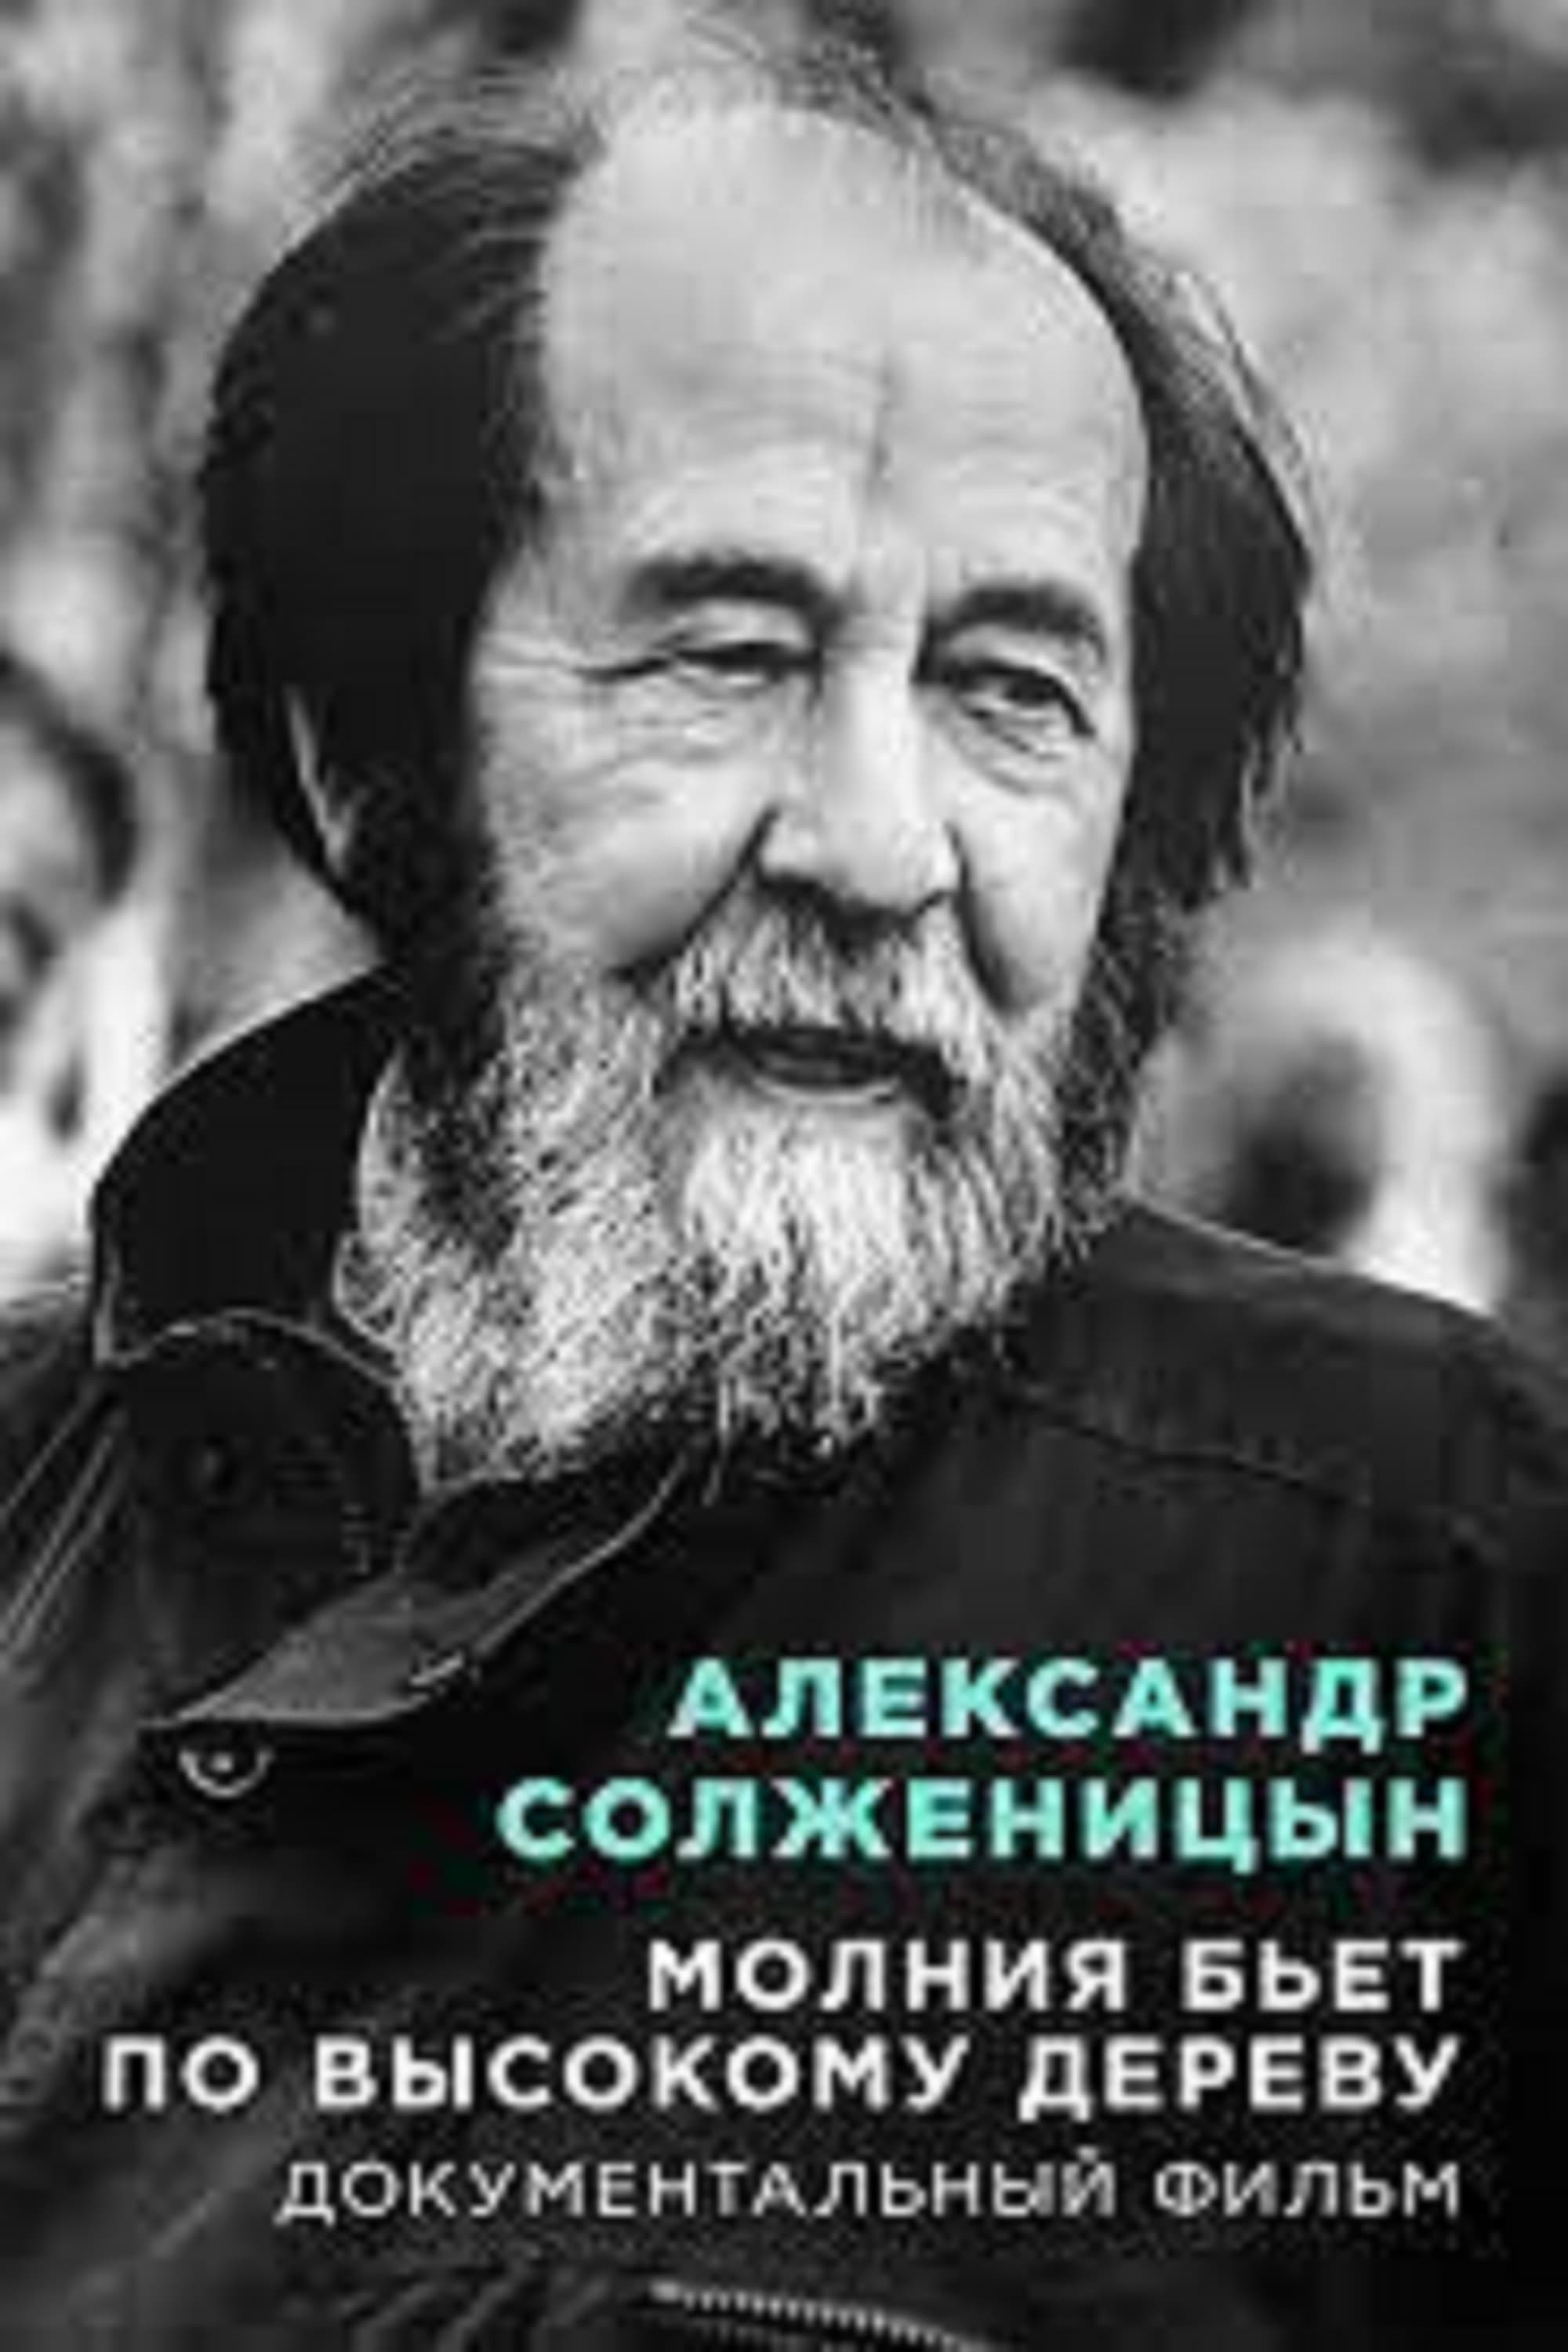 Aleksandr Solzhenitsyn Lightning strikes a tall tree